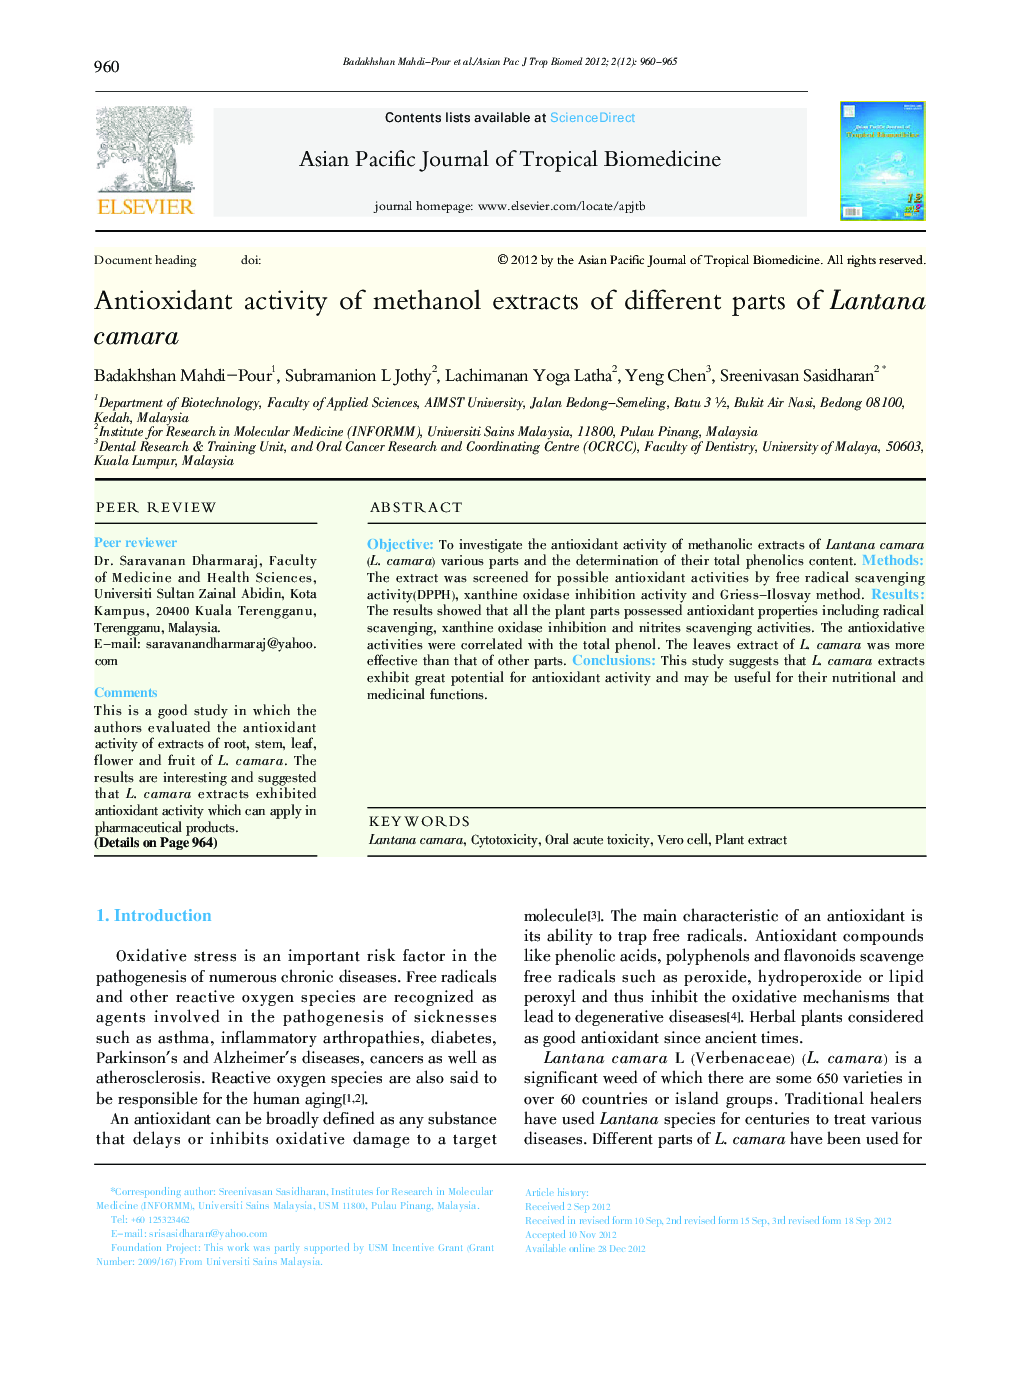 Antioxidant activity of methanol extracts of different parts of Lantana camara